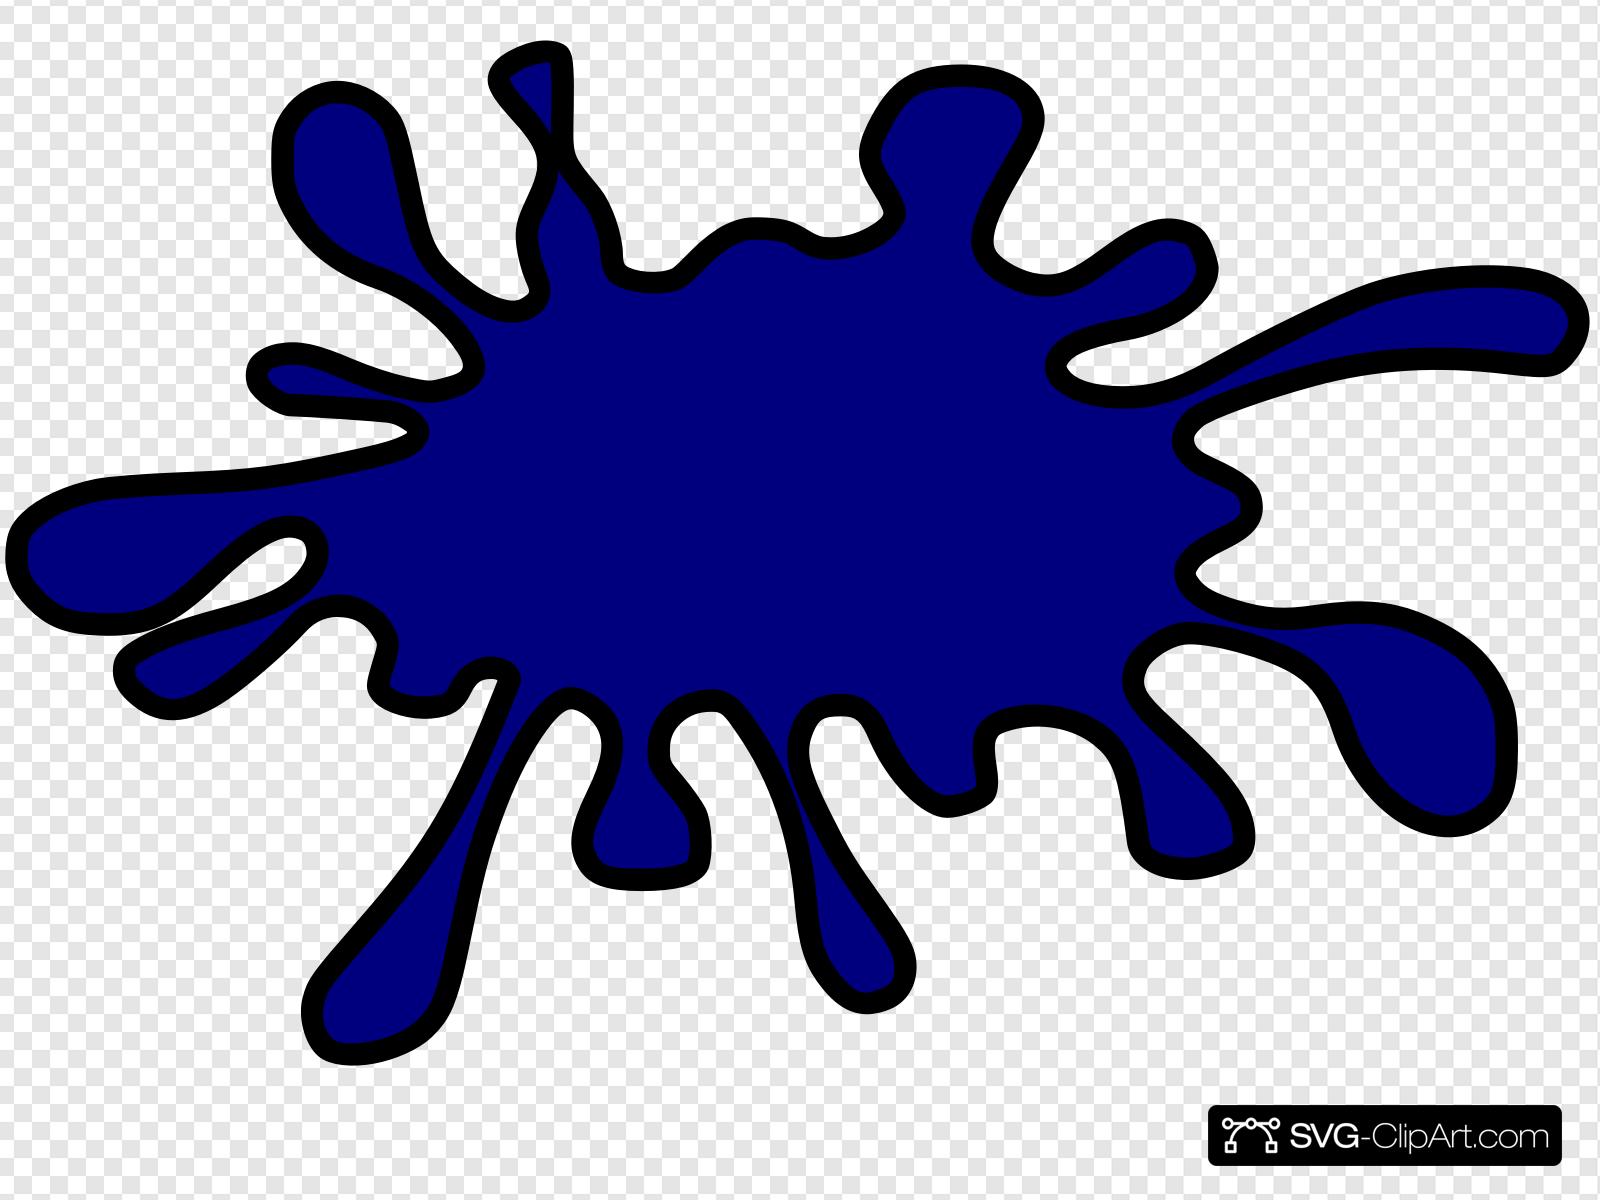 Blue Outline Splat Clip art, Icon and SVG